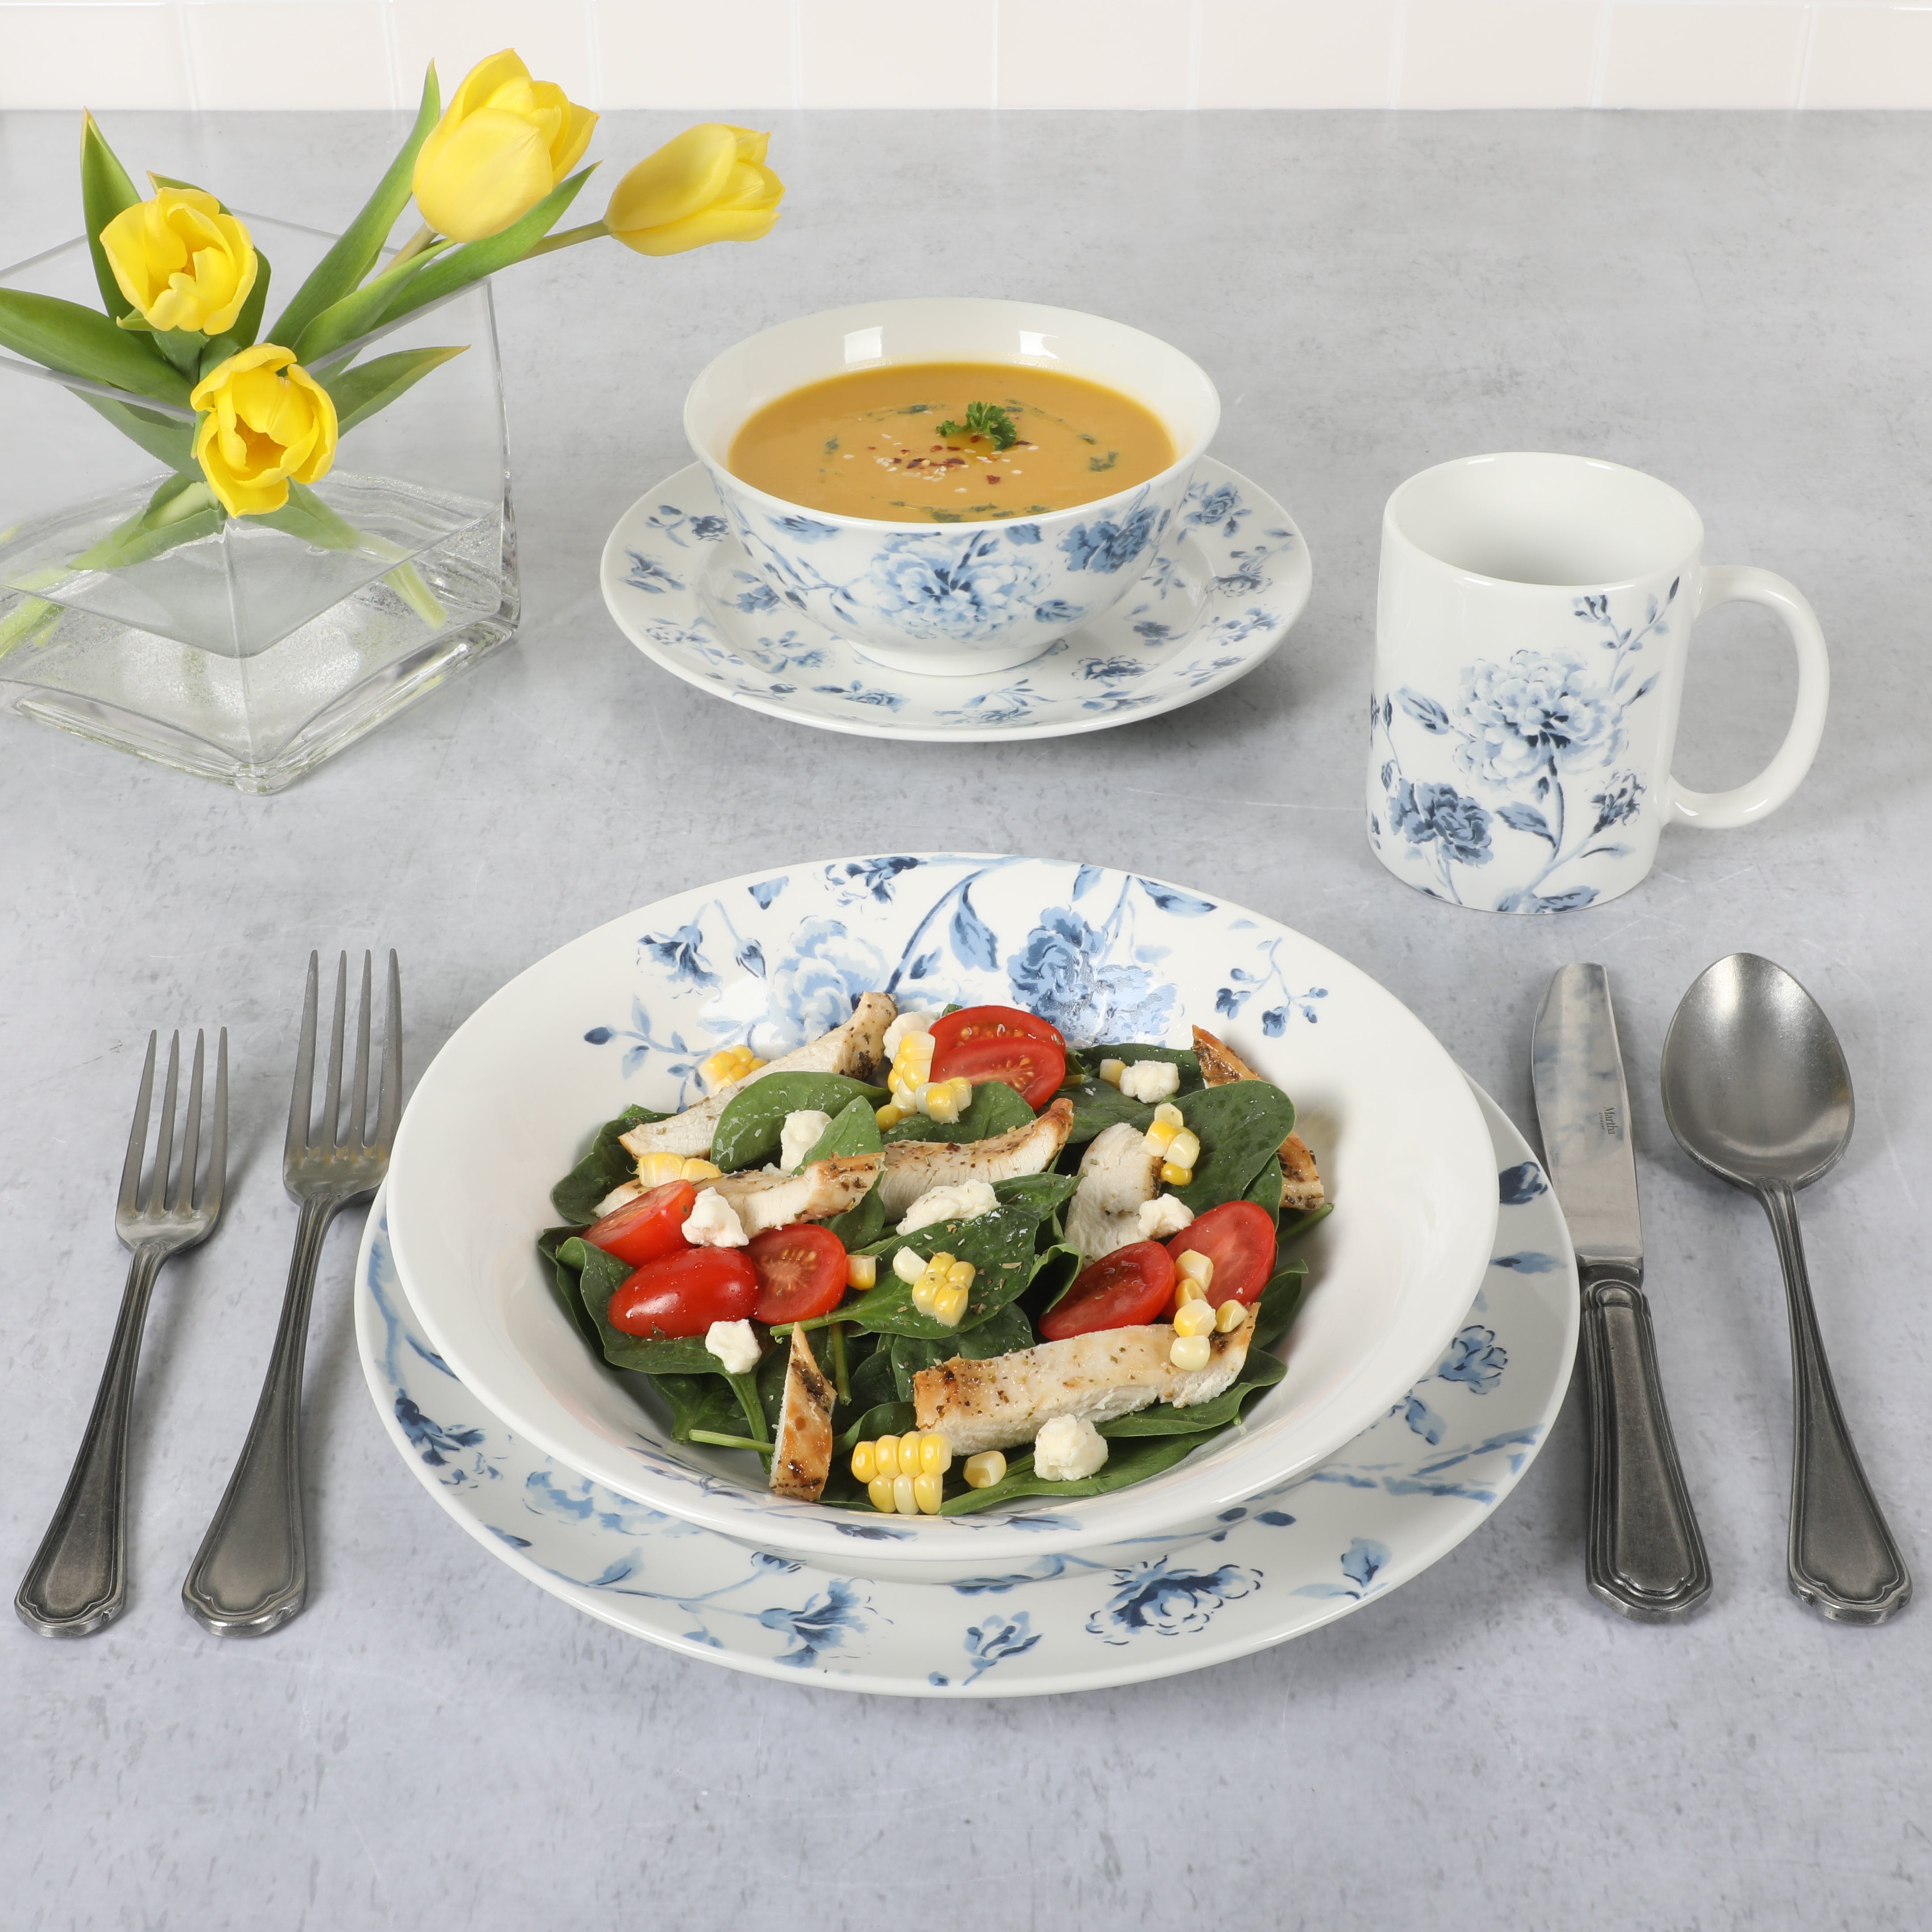 Martha Stewart Empress Bouquet 30-Piece Decorated Porcelain Dinnerware Plates and Bowls Set - Blue Floral